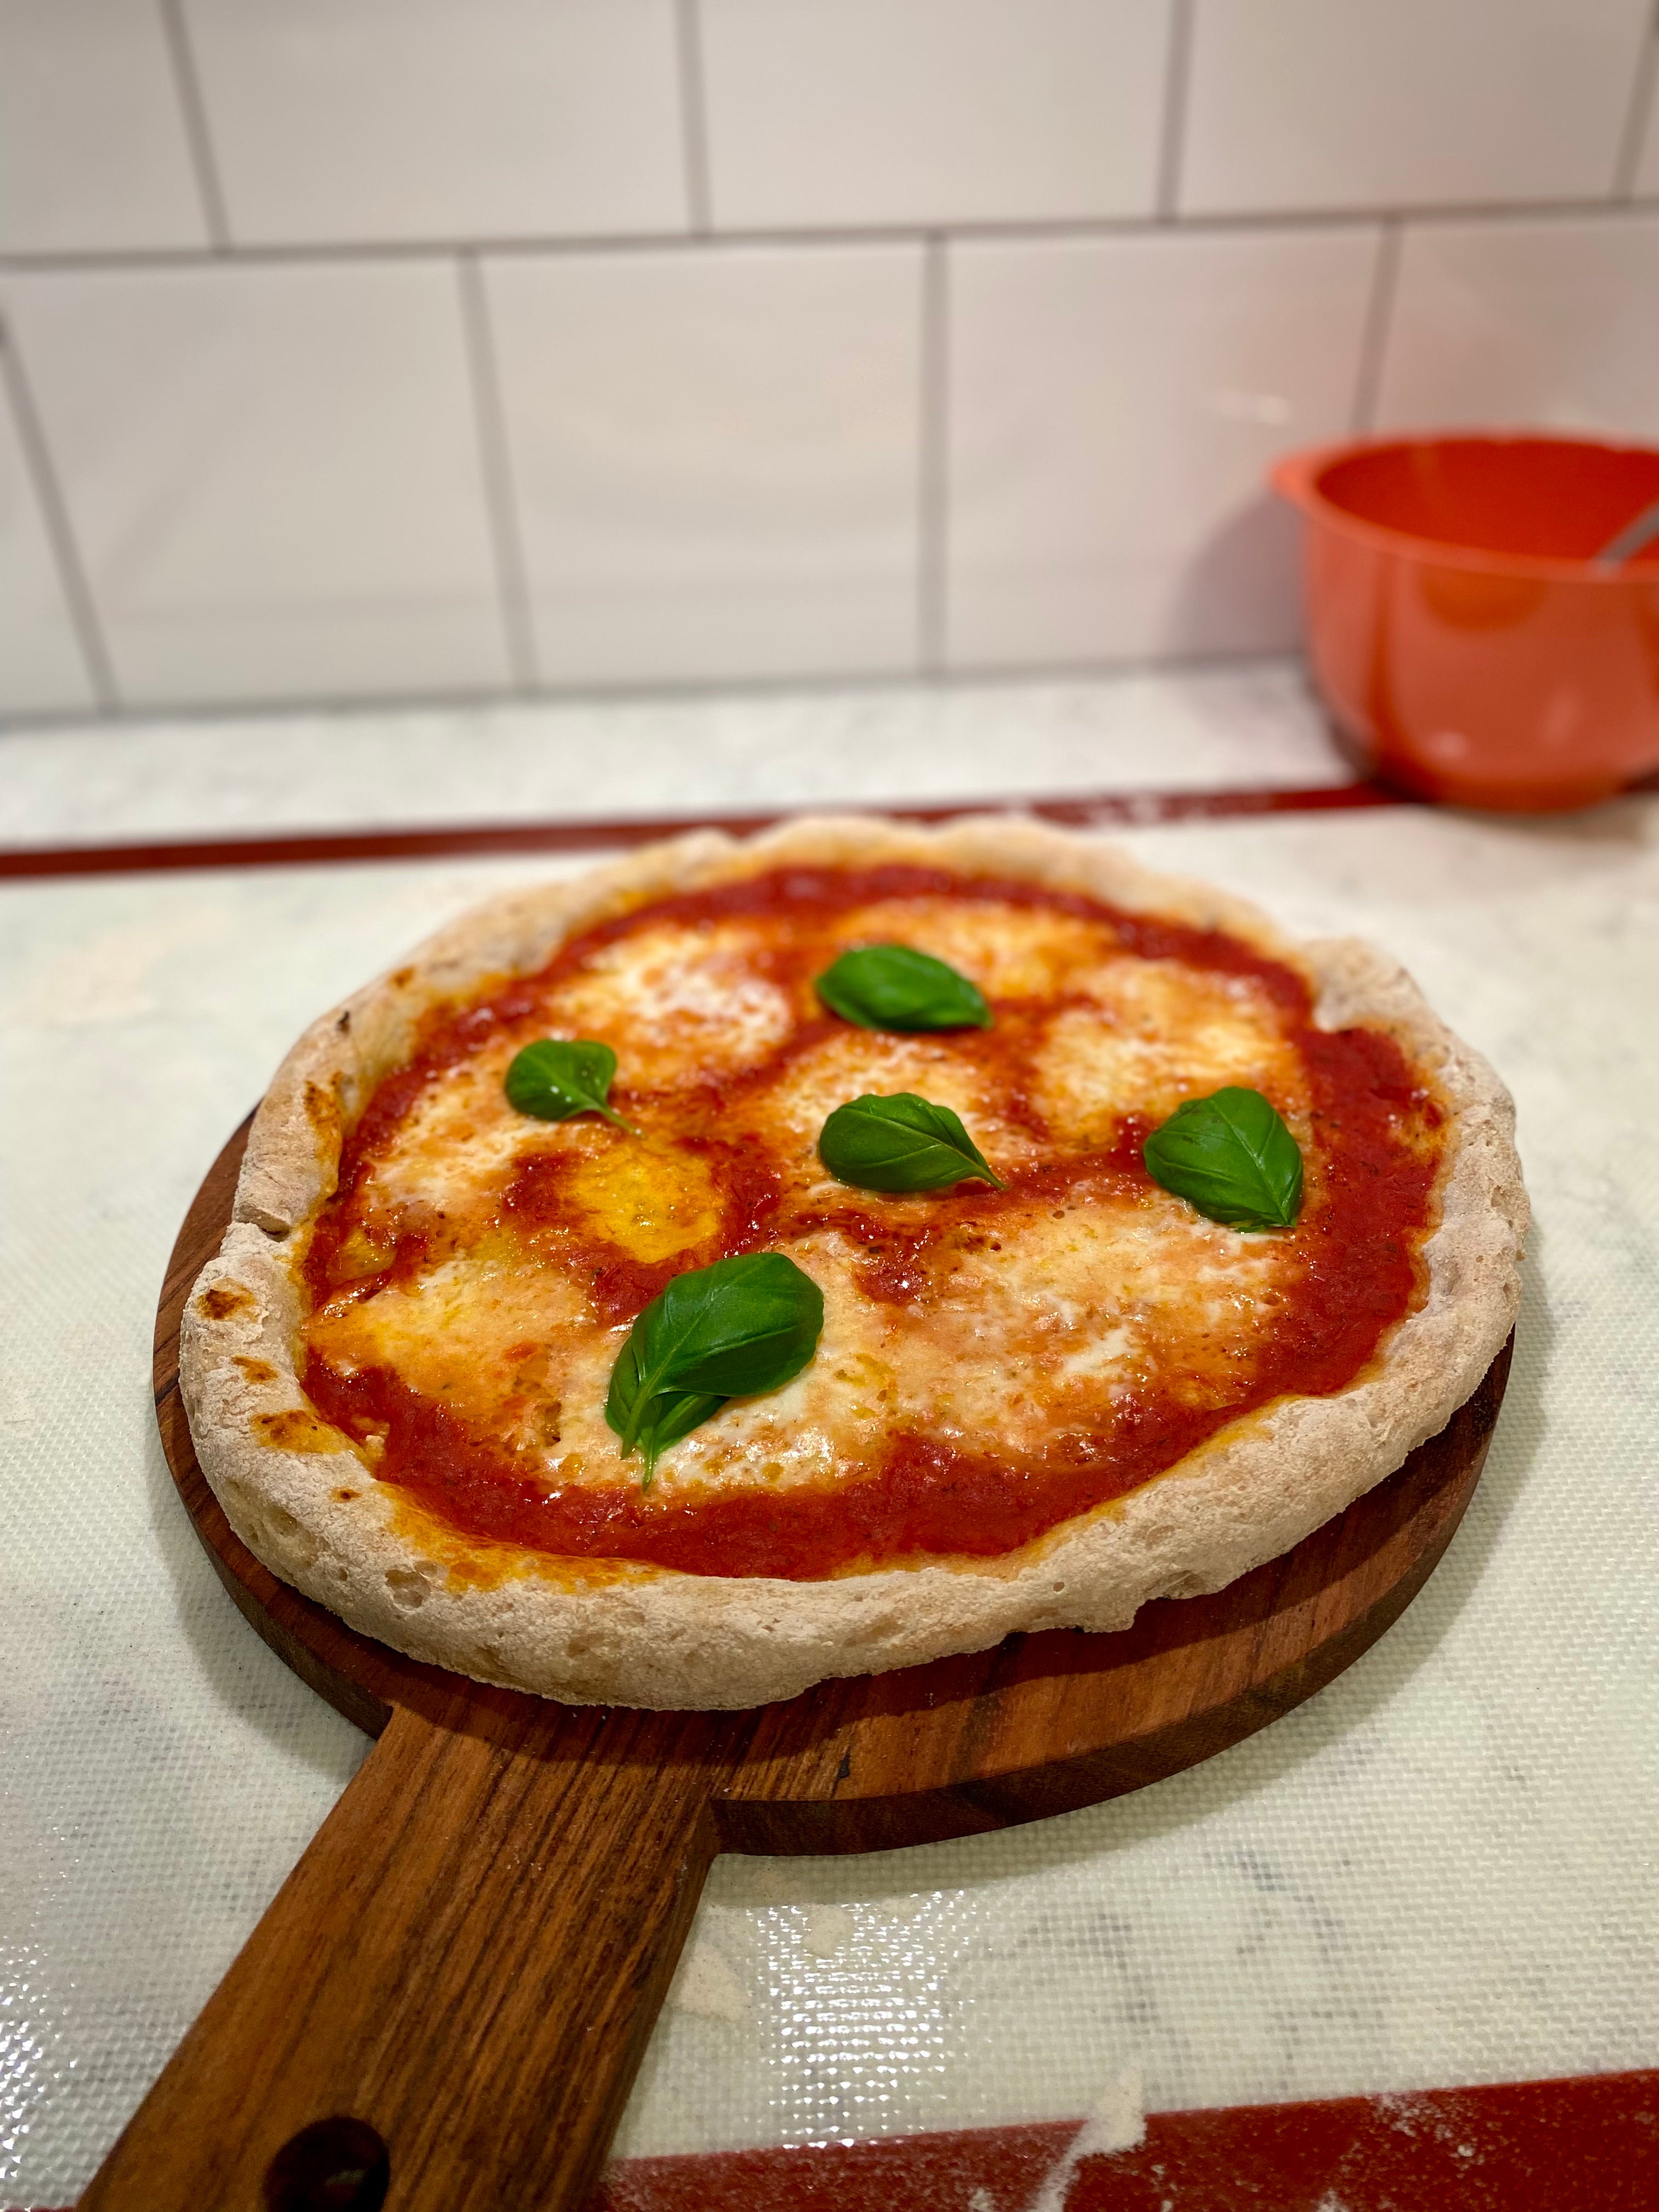 Gluten-free Pizza &amp; Focaccia Mix